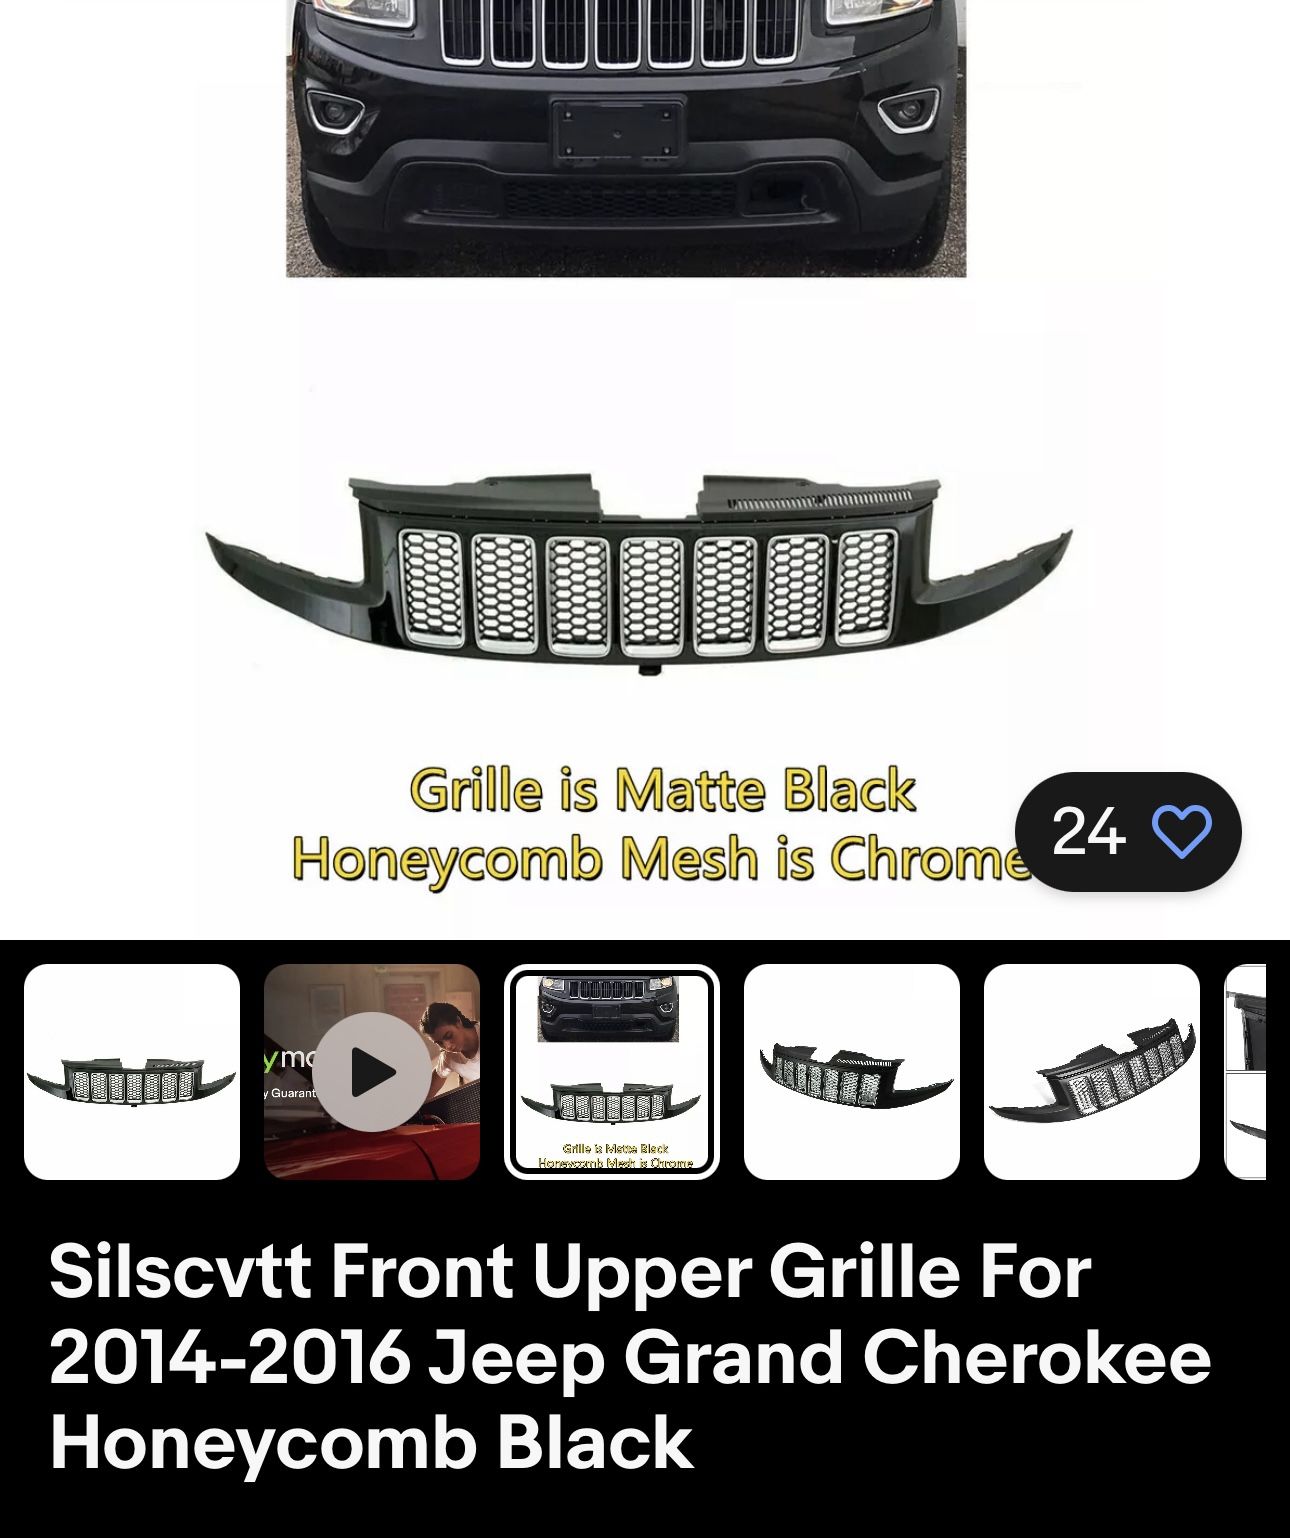 Silscvtt Front Upper Grille For 2014-2016 Jeep Grand Cherokee Honeycomb Black